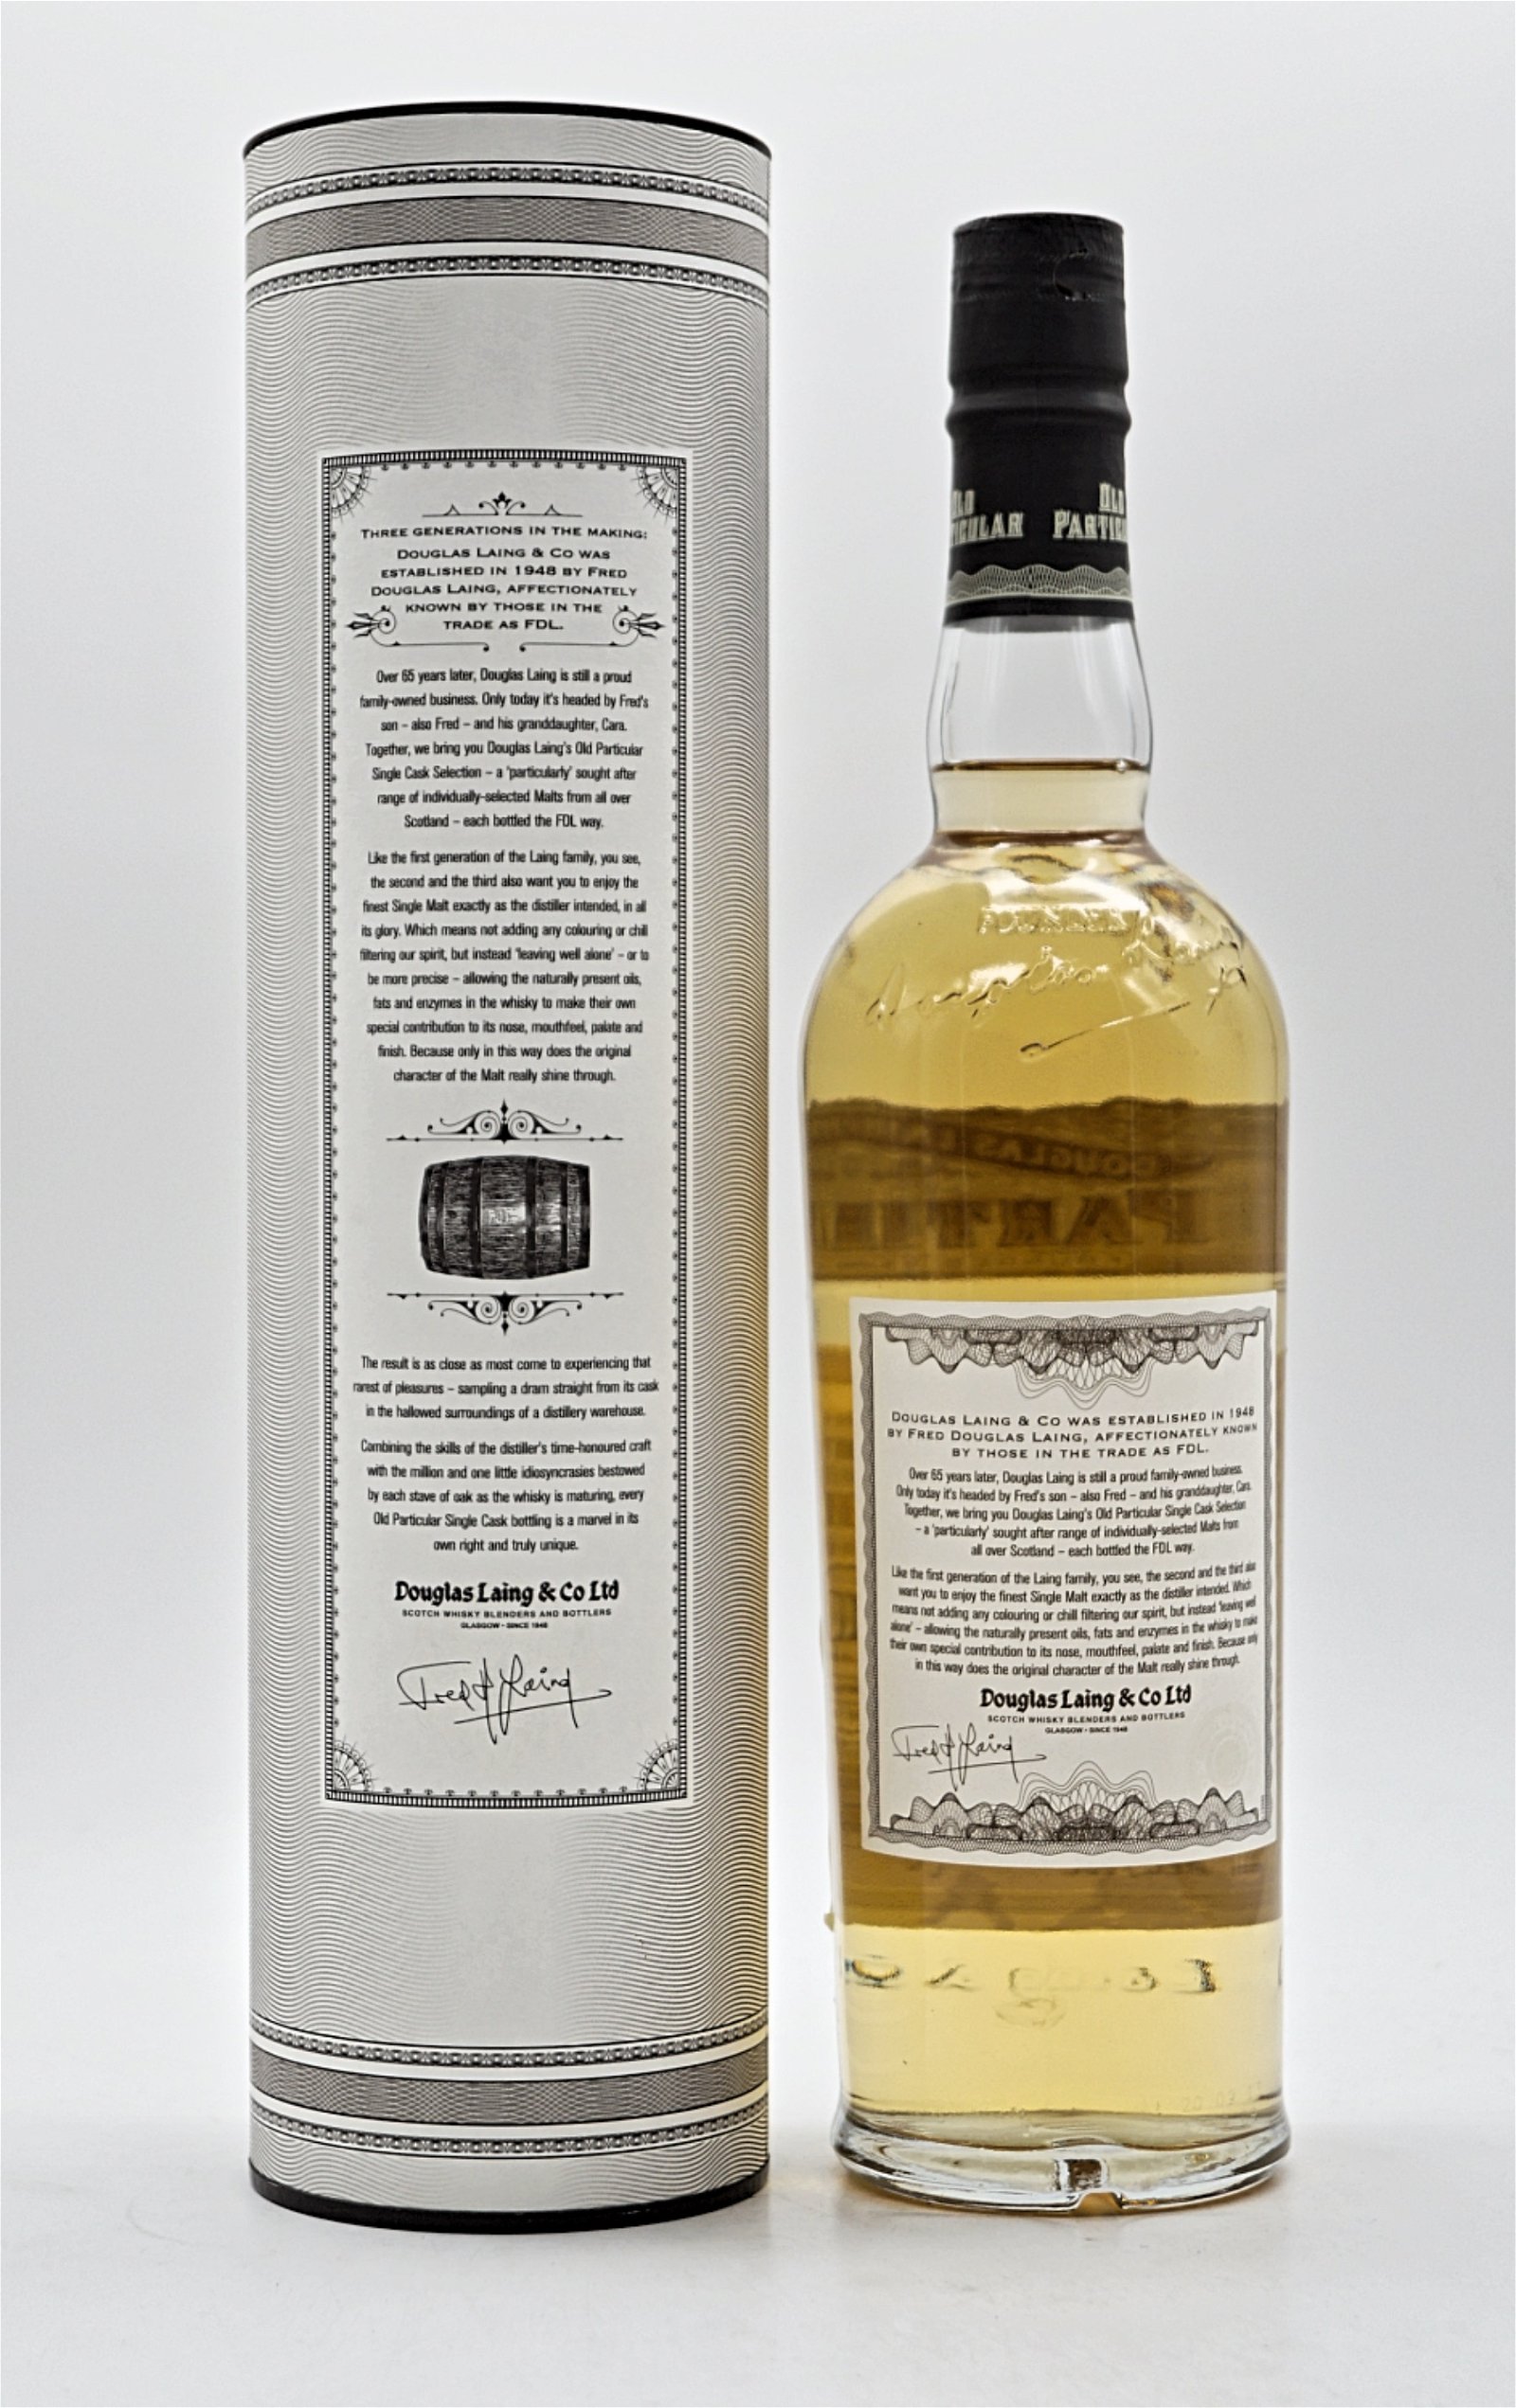 Old Particular Royal Lochnagar Distillery 16 Jahre 1997/2013 48,4% 548 Fl. Single Cask Single Malt Scotch Whisky